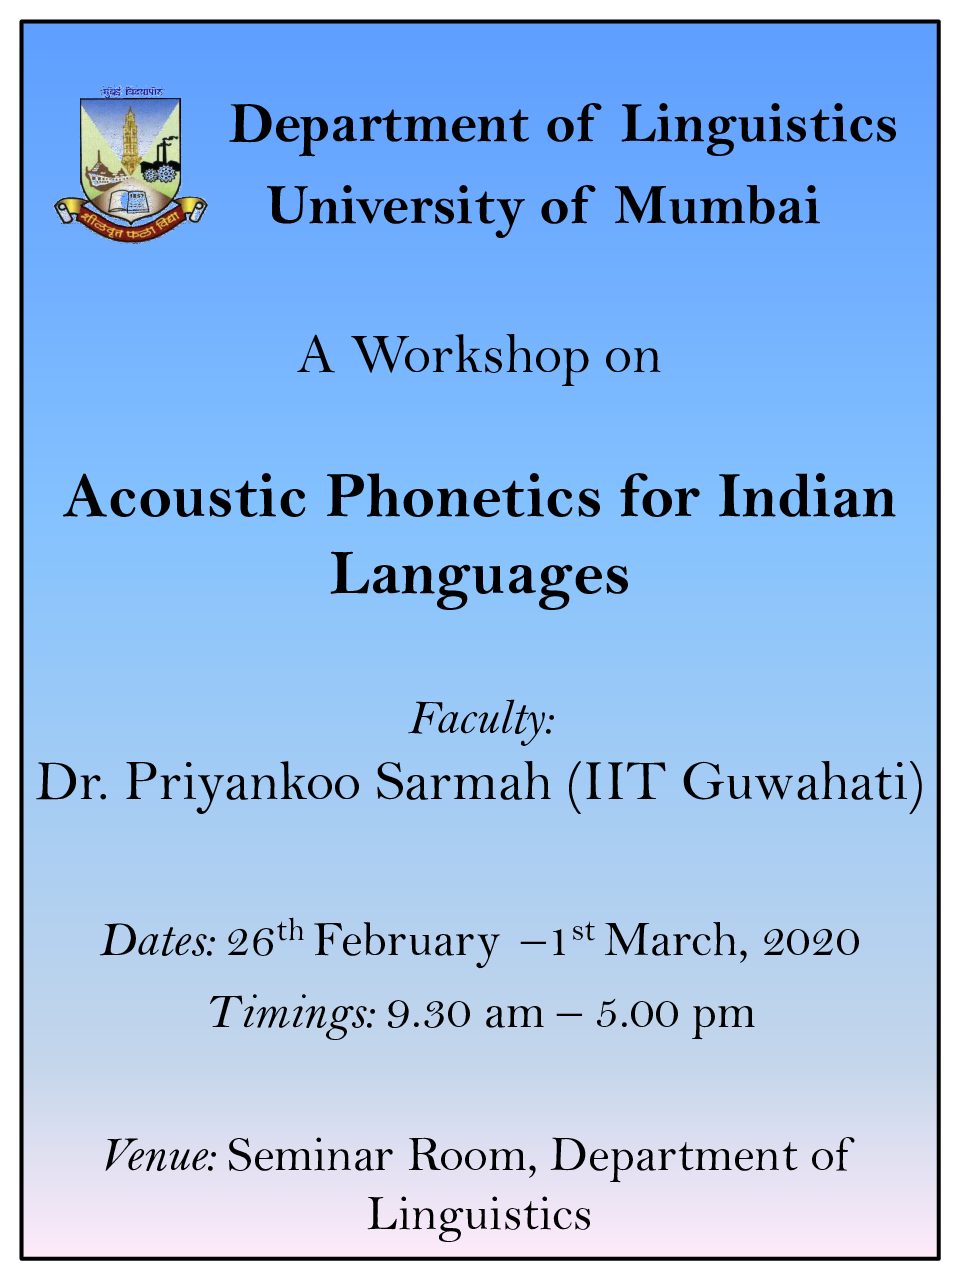 Workshop on Acoustic Phonetics for Indian Languages